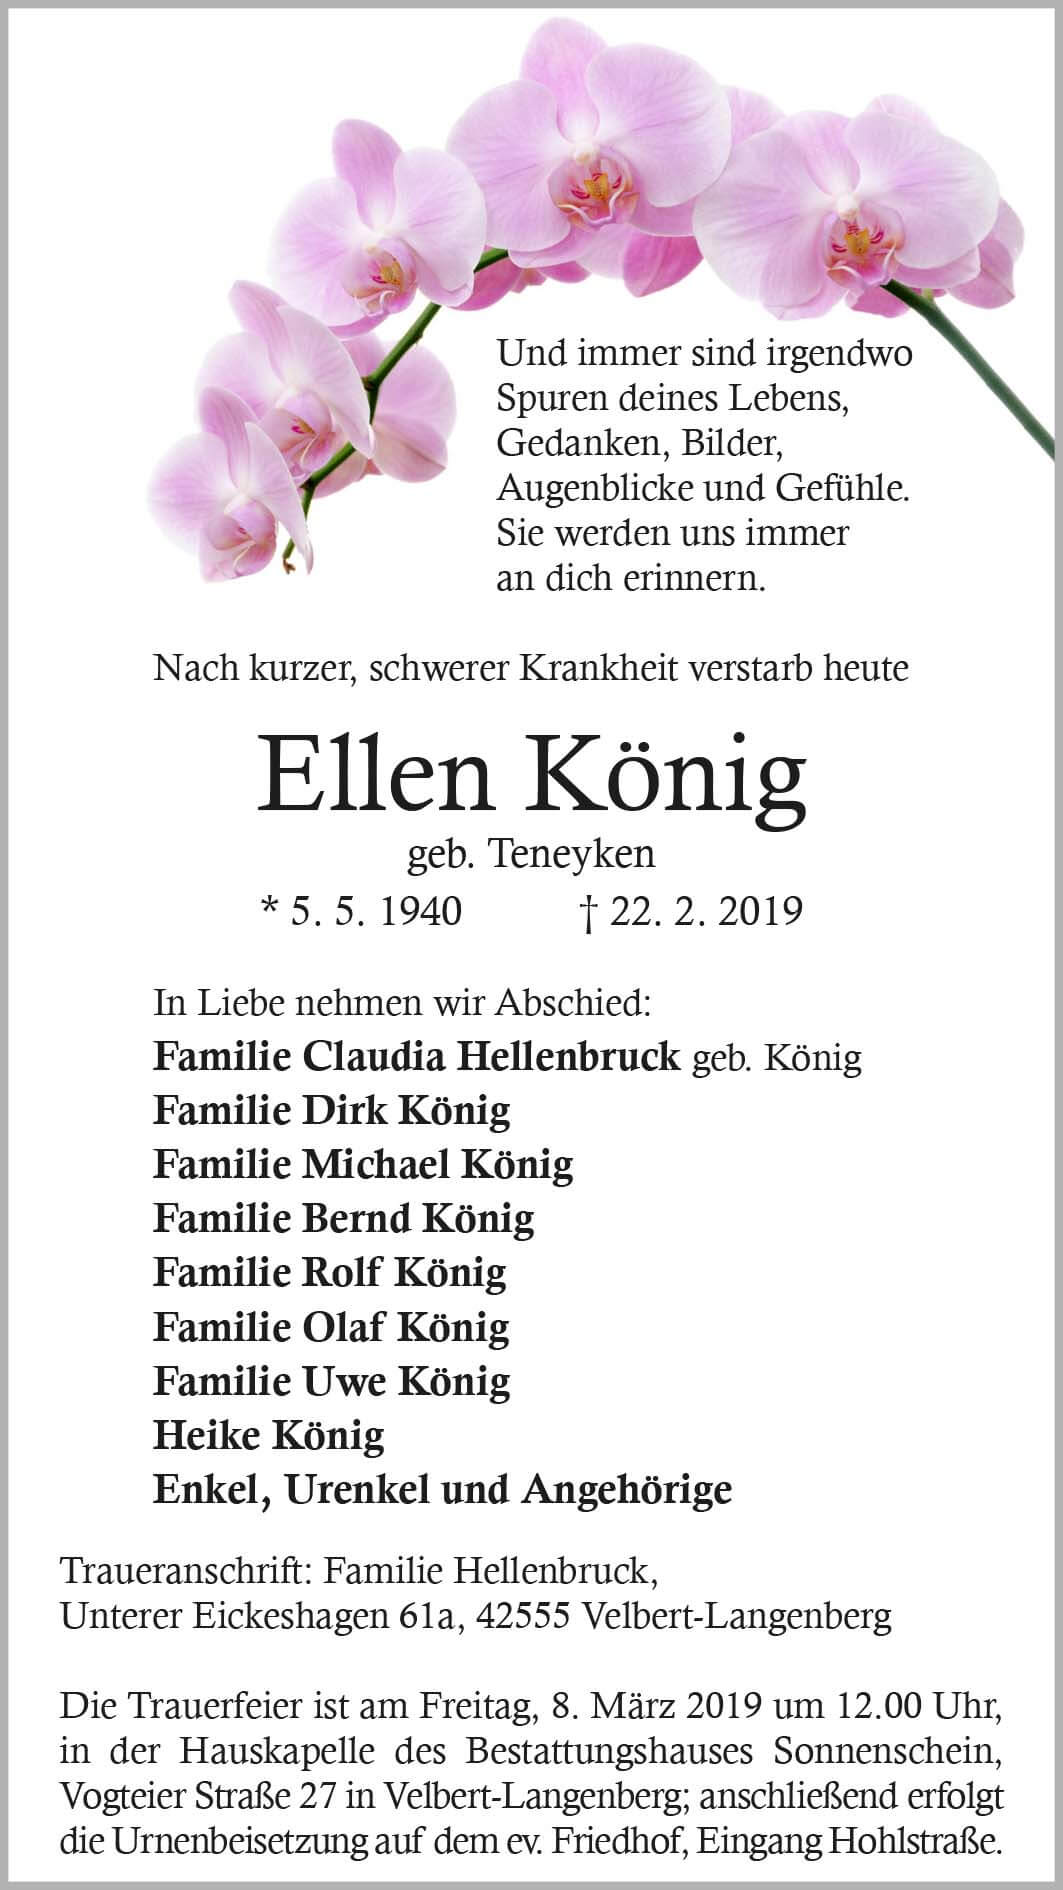 Ellen König † 22. 2. 2019